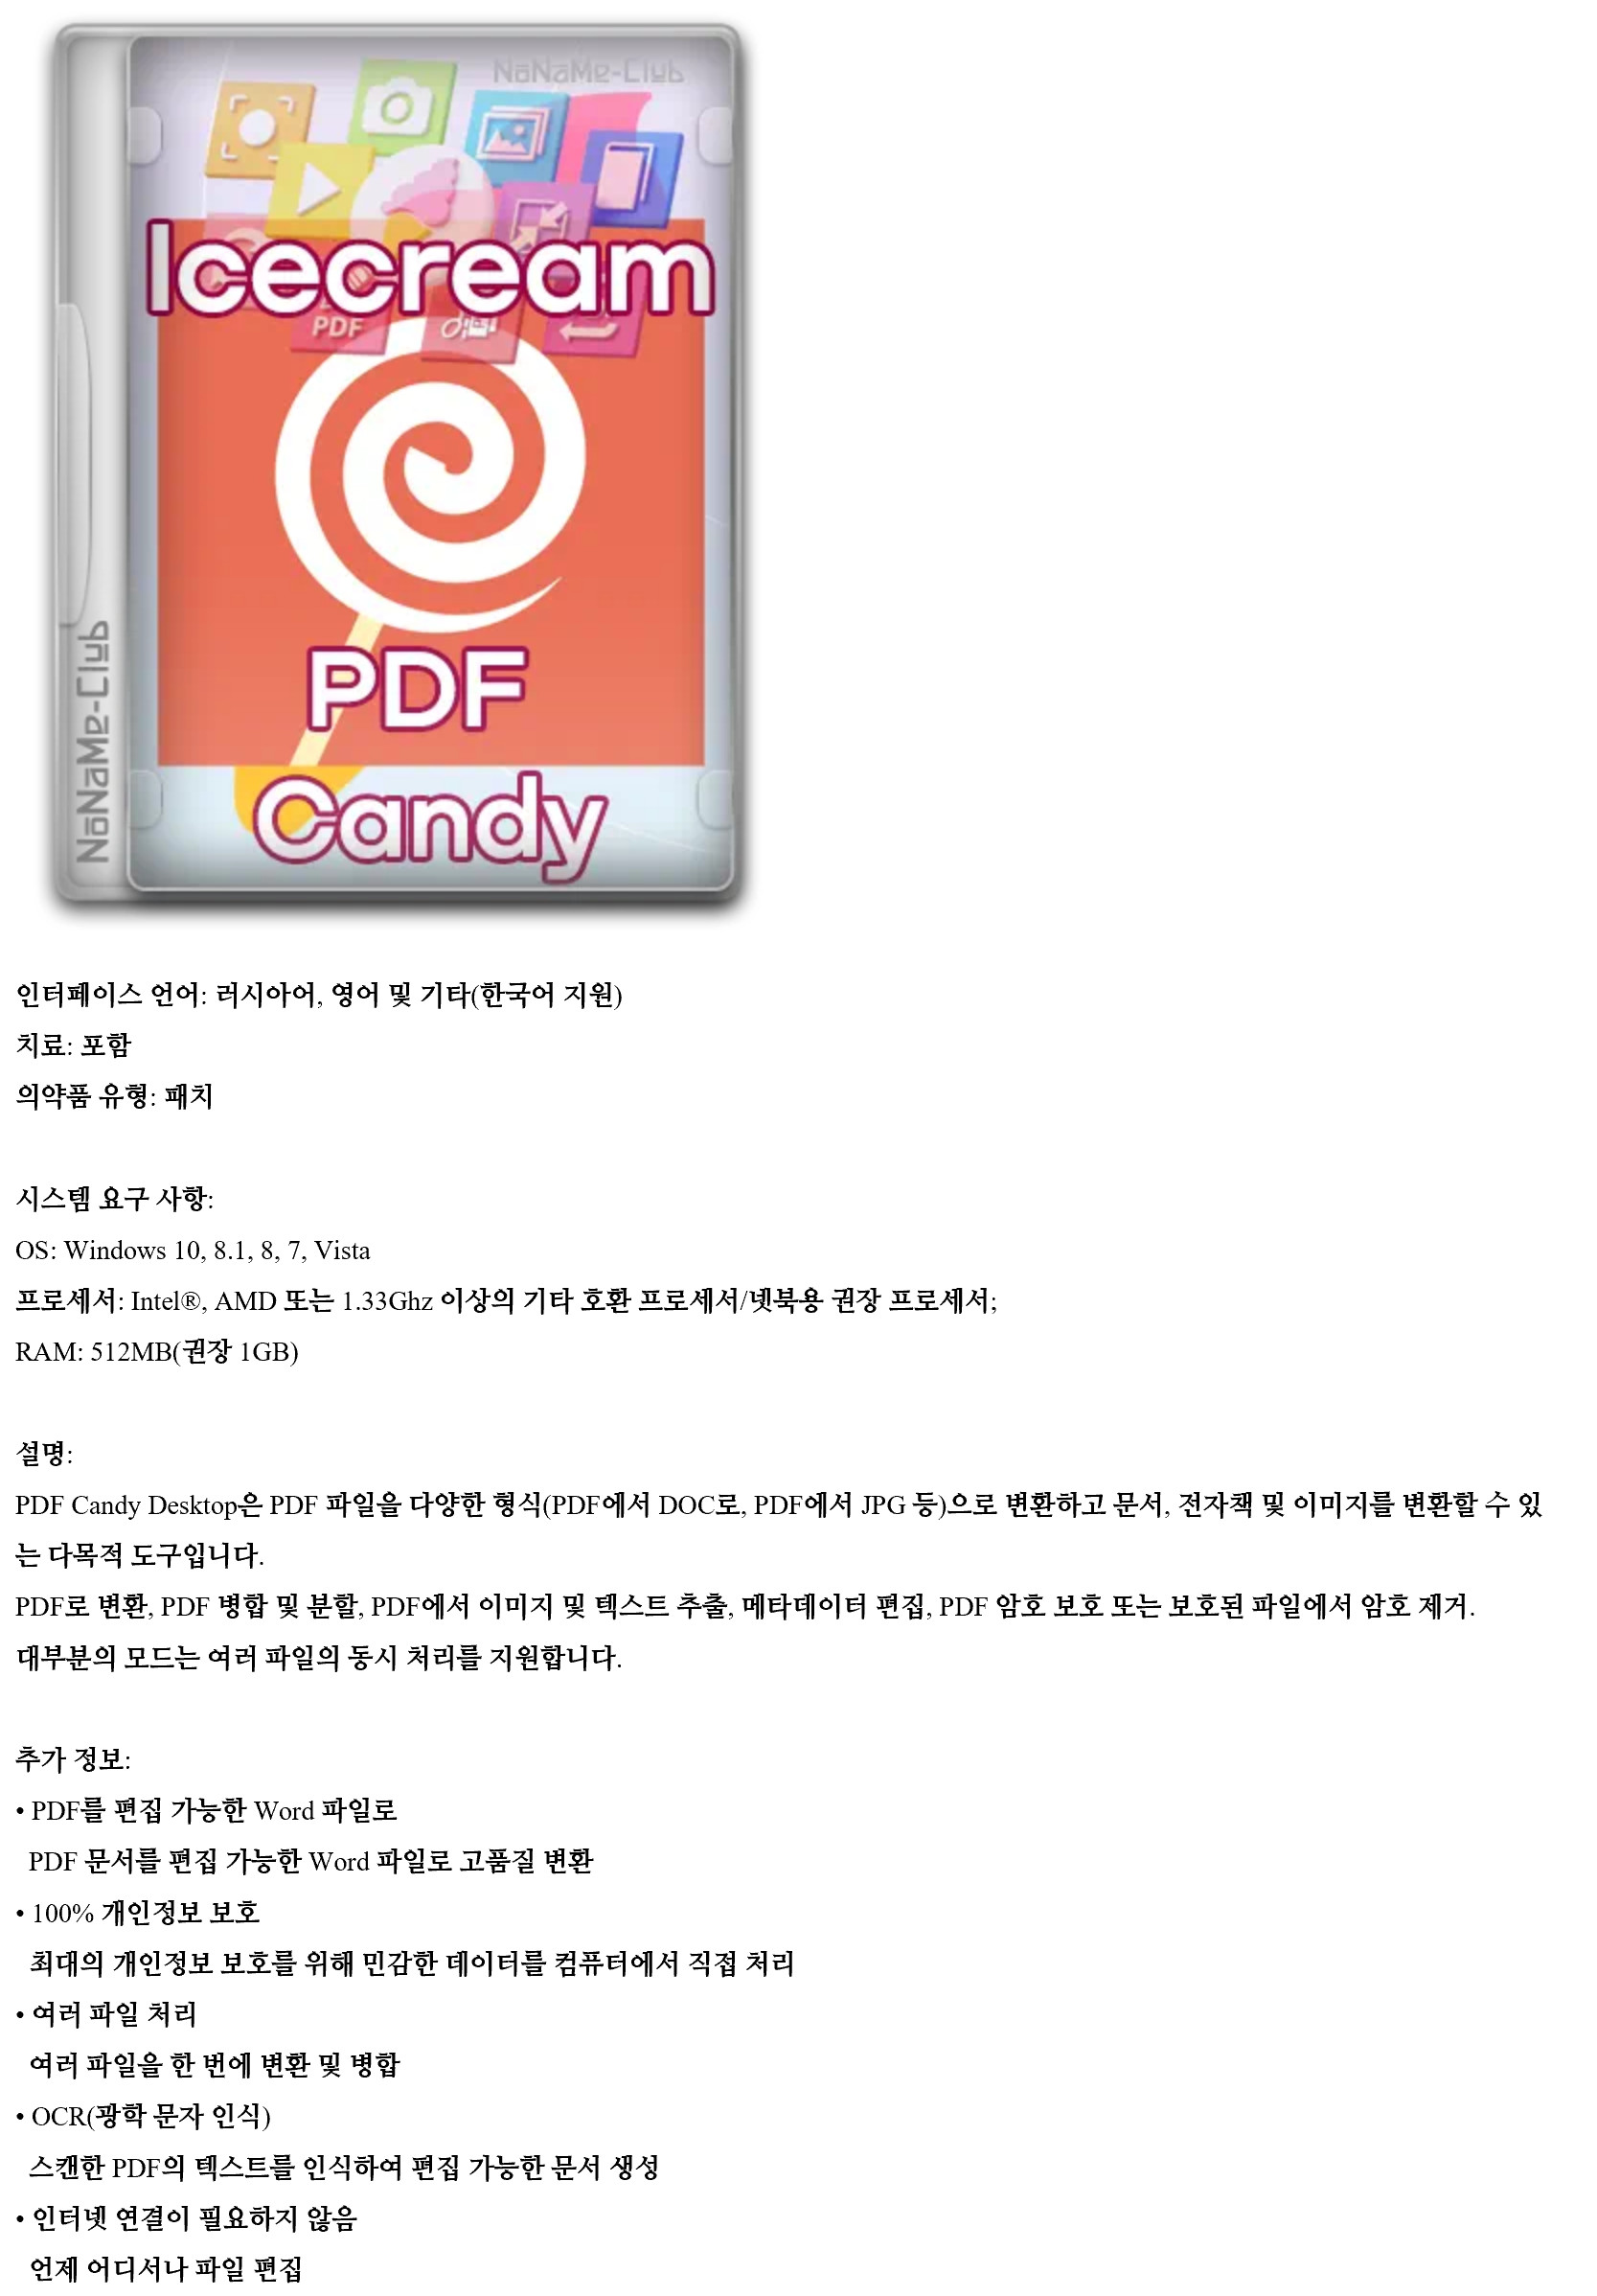 Icecream PDF Candy Desktop.jpg